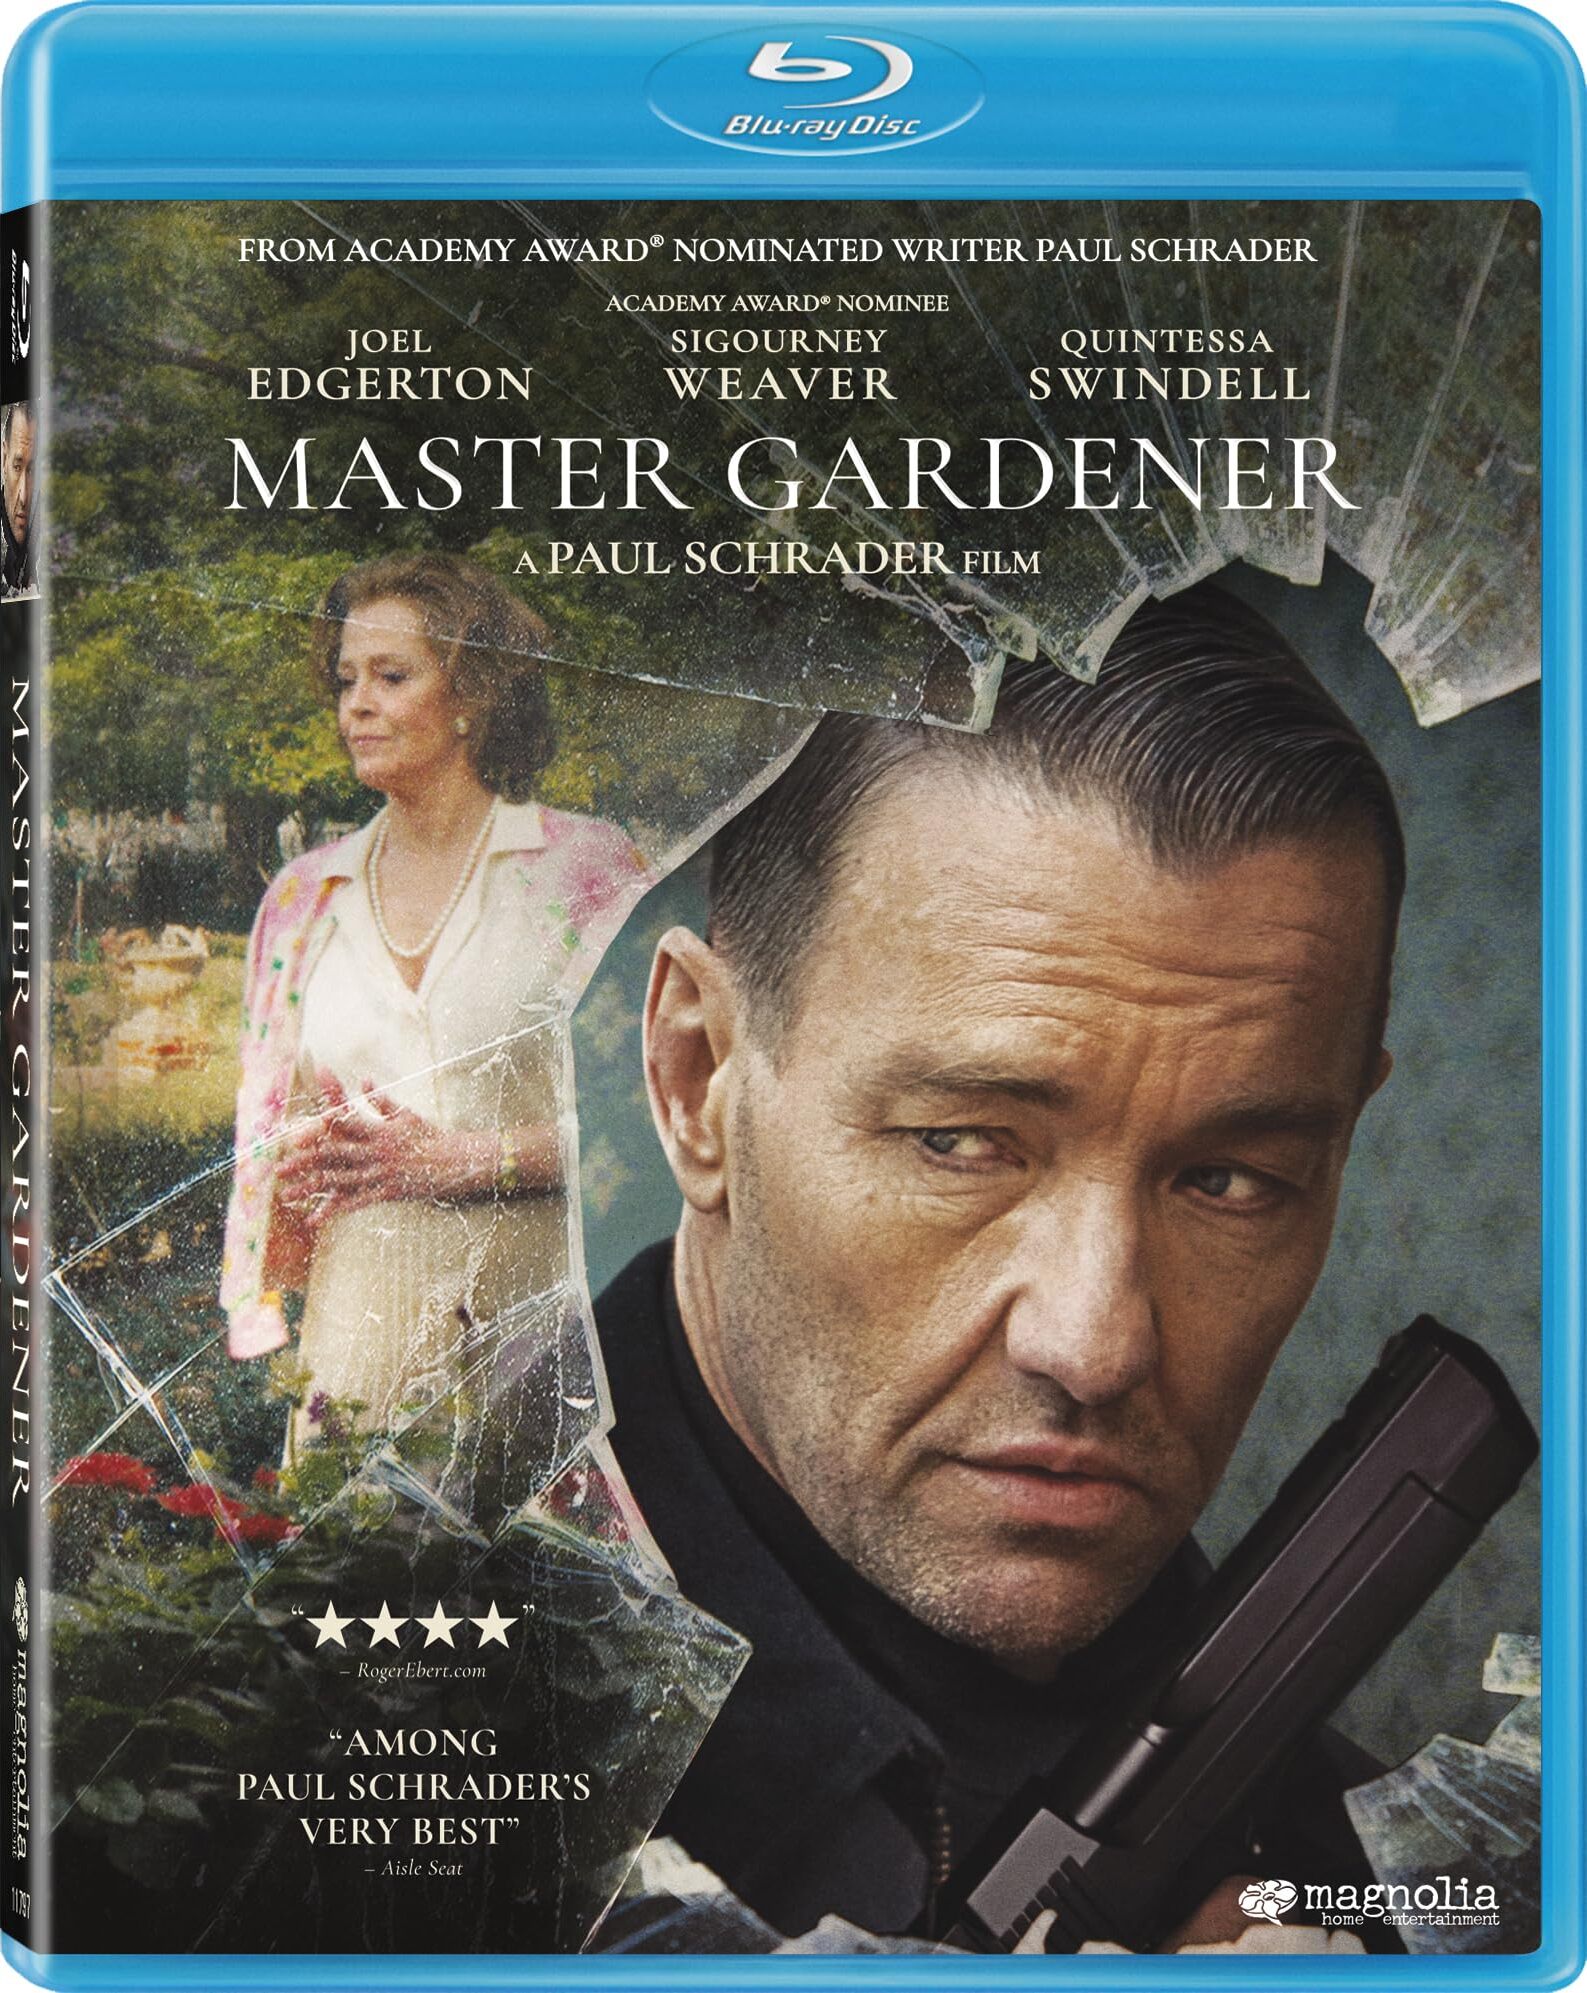 Magnolia: Paul Schrader's Master Gardener Prepped for Blu-ray